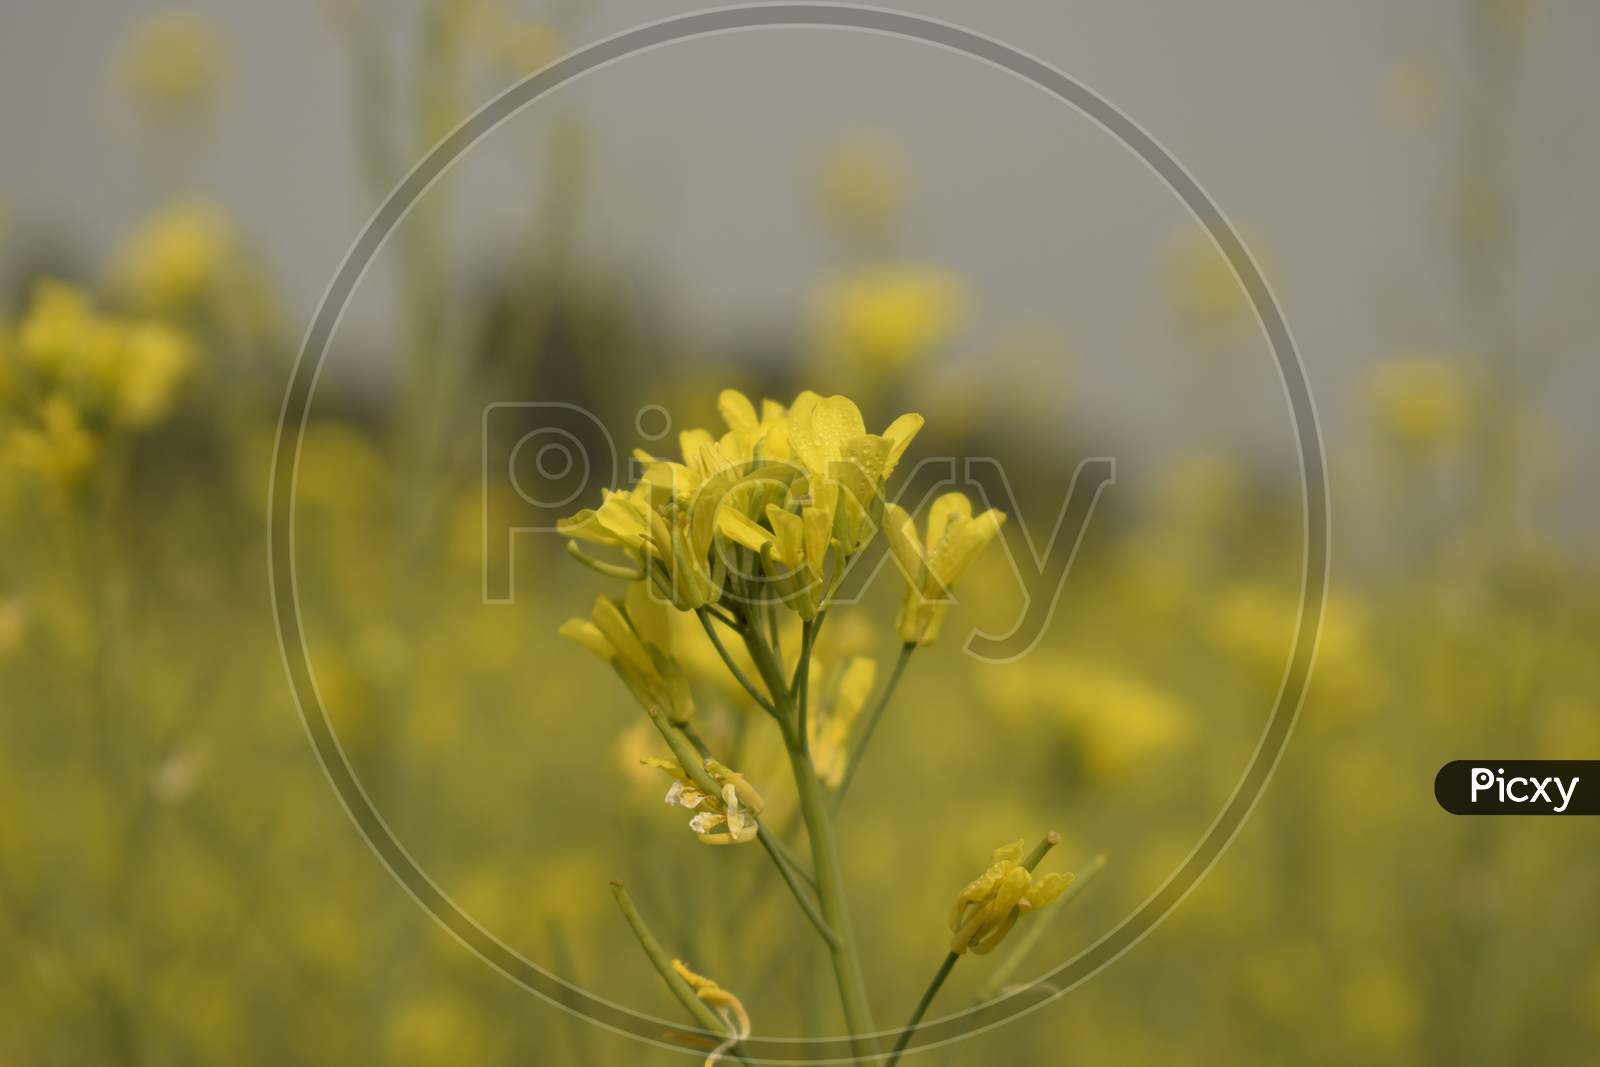 Mustard Plant Flower On The Stem